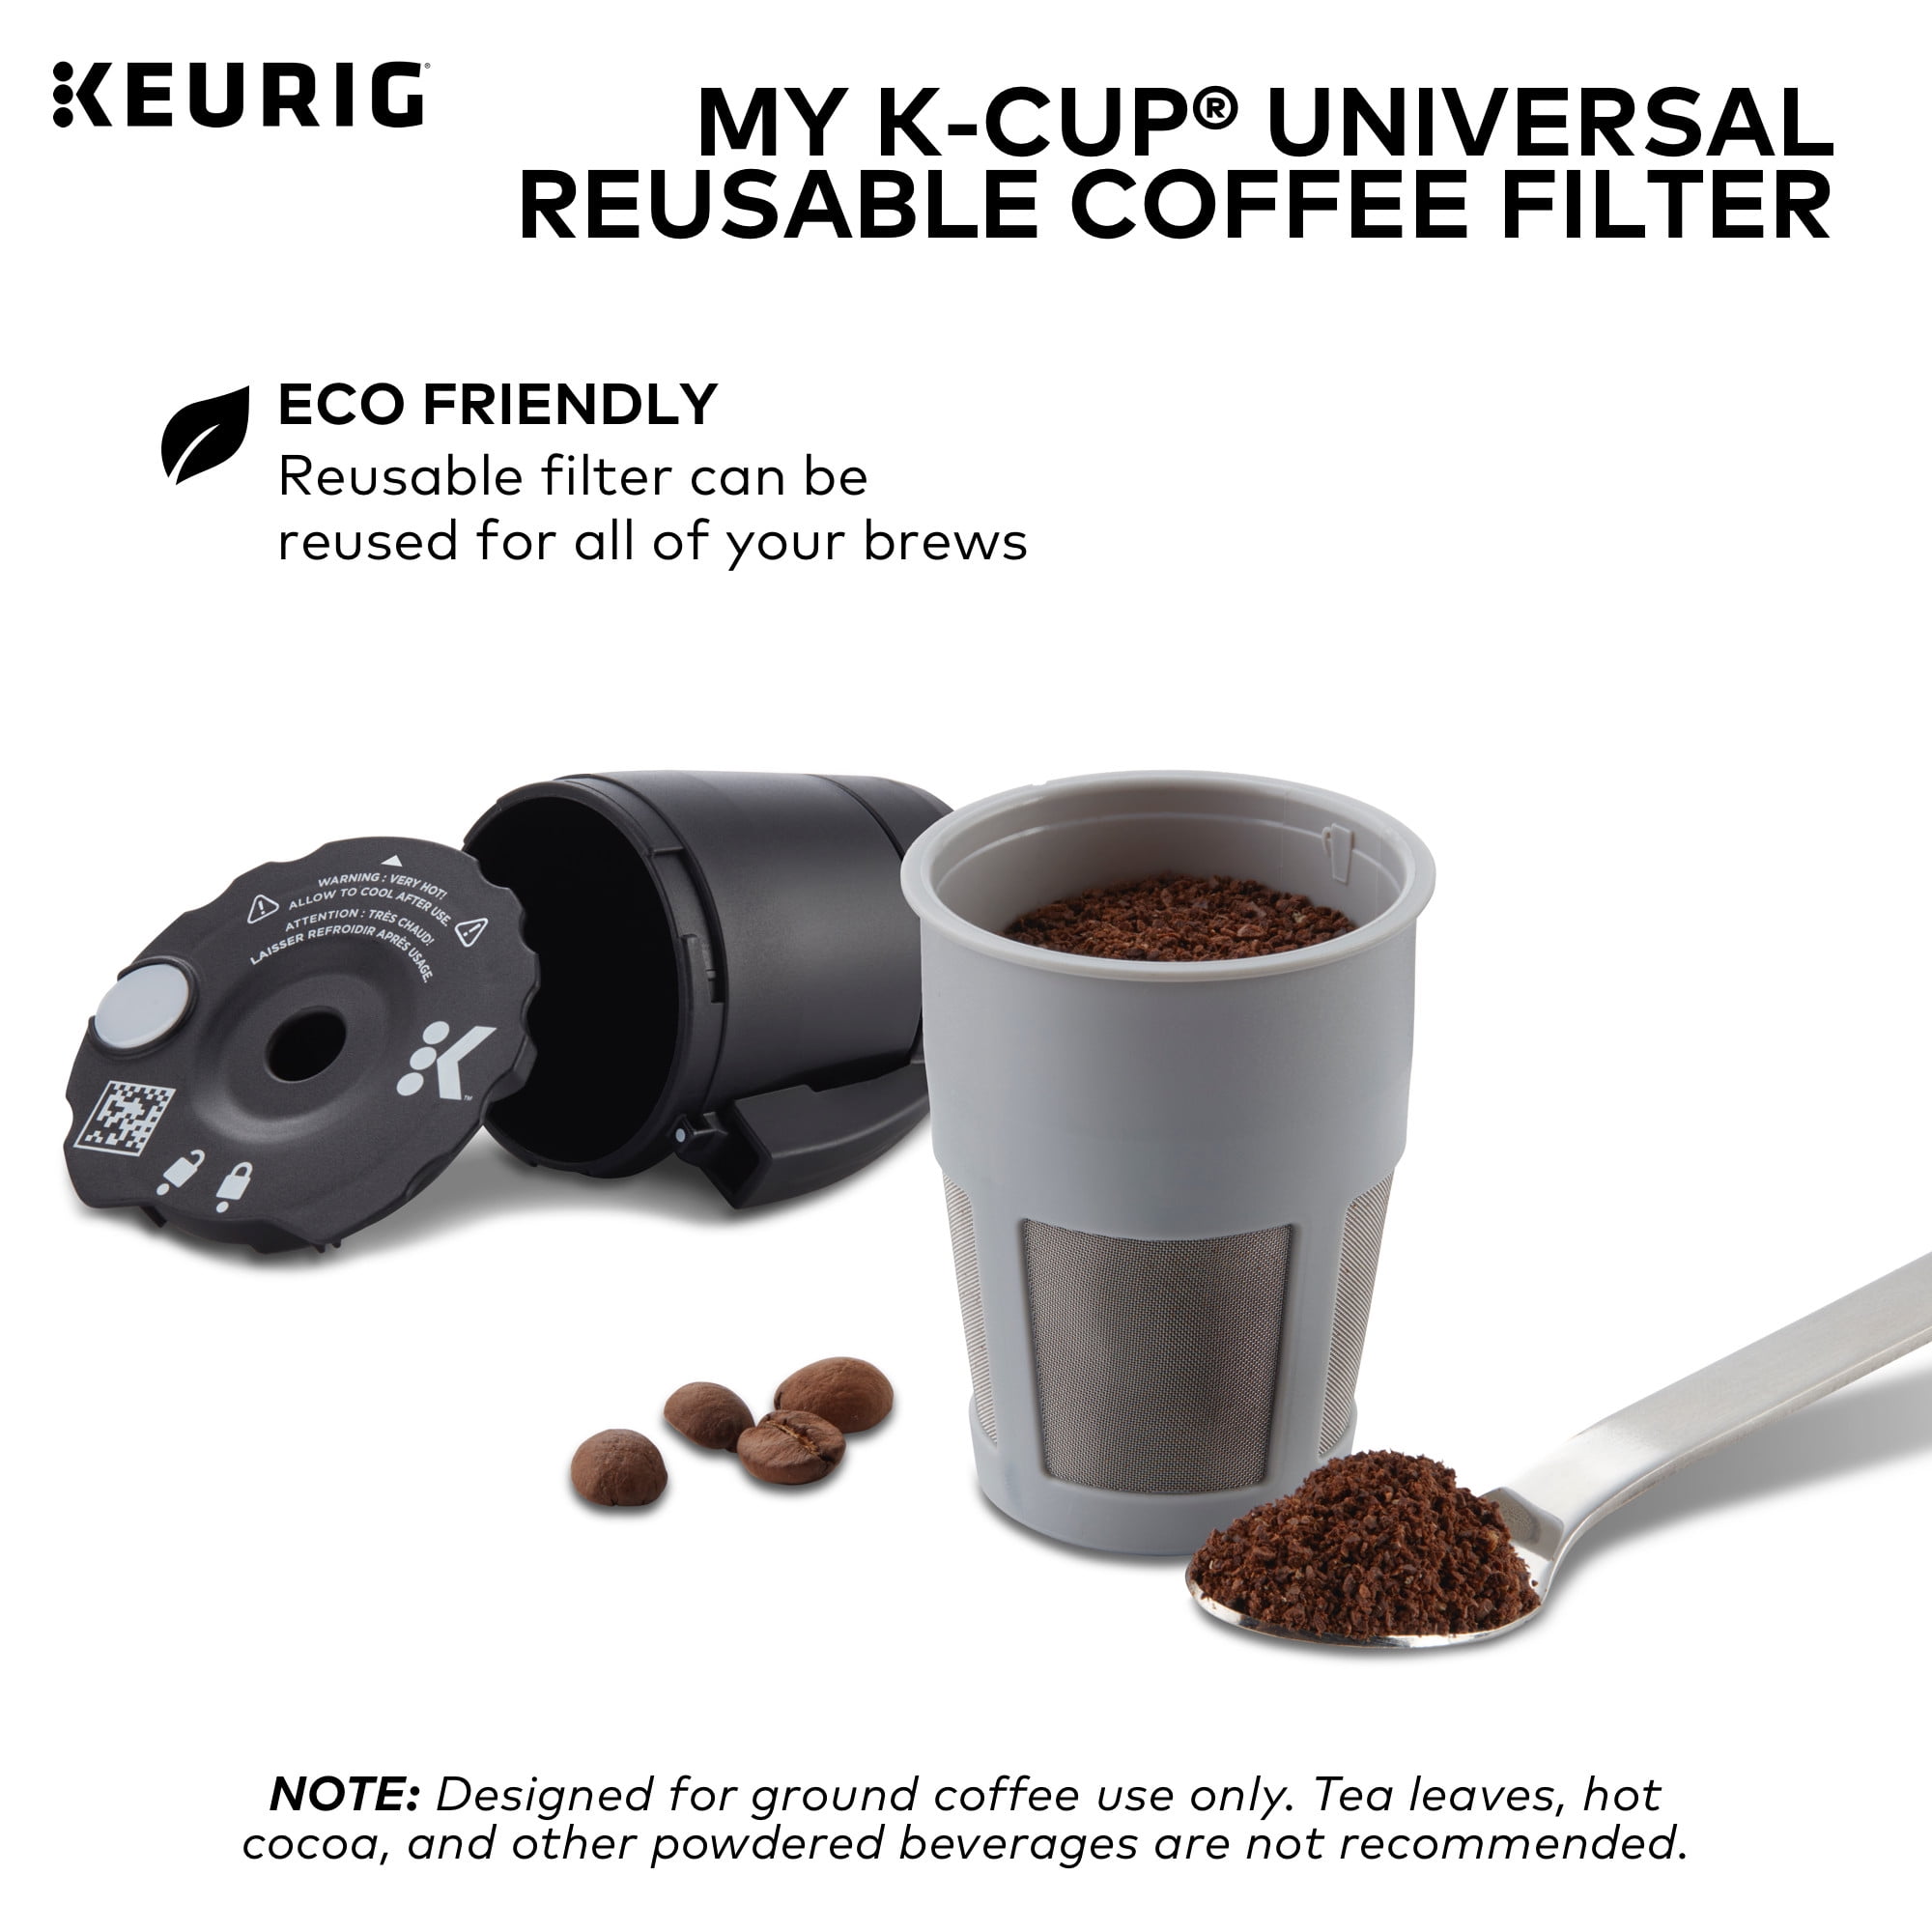 How to install keurig my k cup reusable coffee filter Keurig My K Cup Universal Reusable Ground Coffee Filter Compatible With All Keurig K Cup Pod Coffee Makers 2 0 And 1 0 Walmart Com Walmart Com